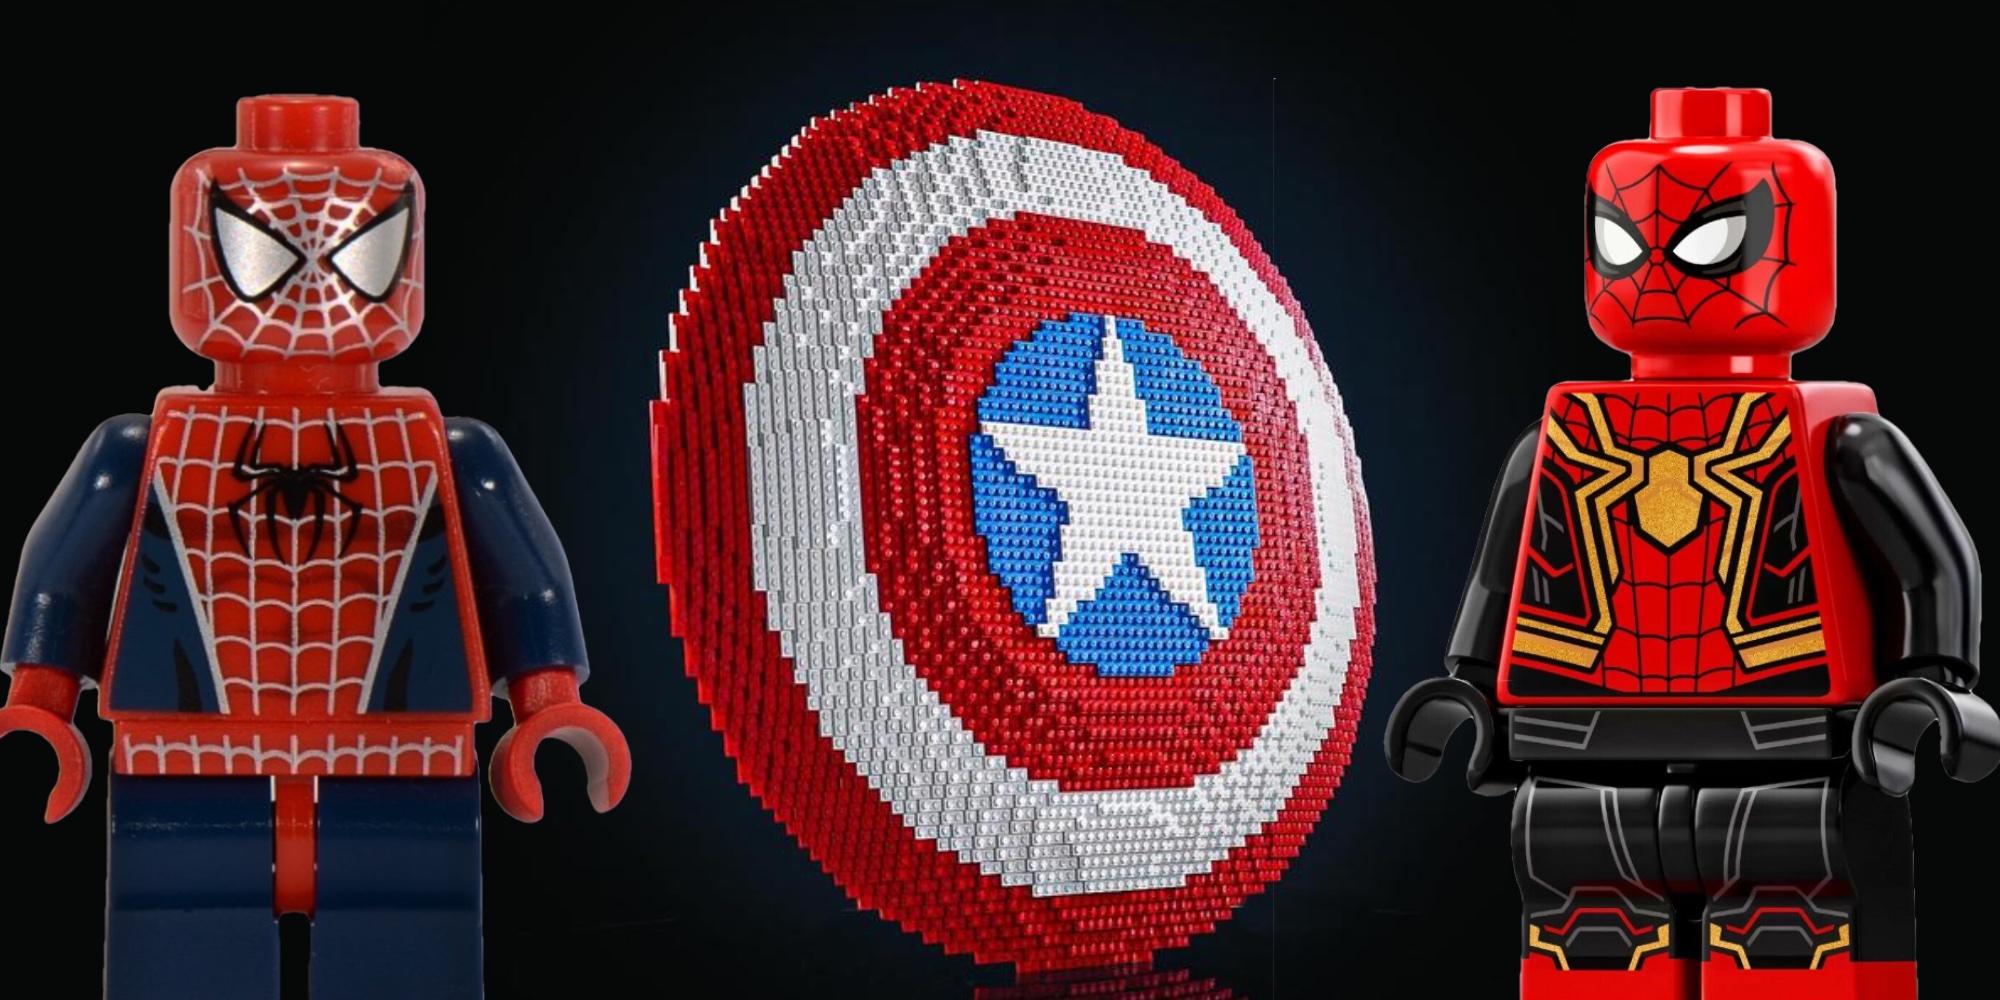 LEGO Marvel Super Heroes 2023